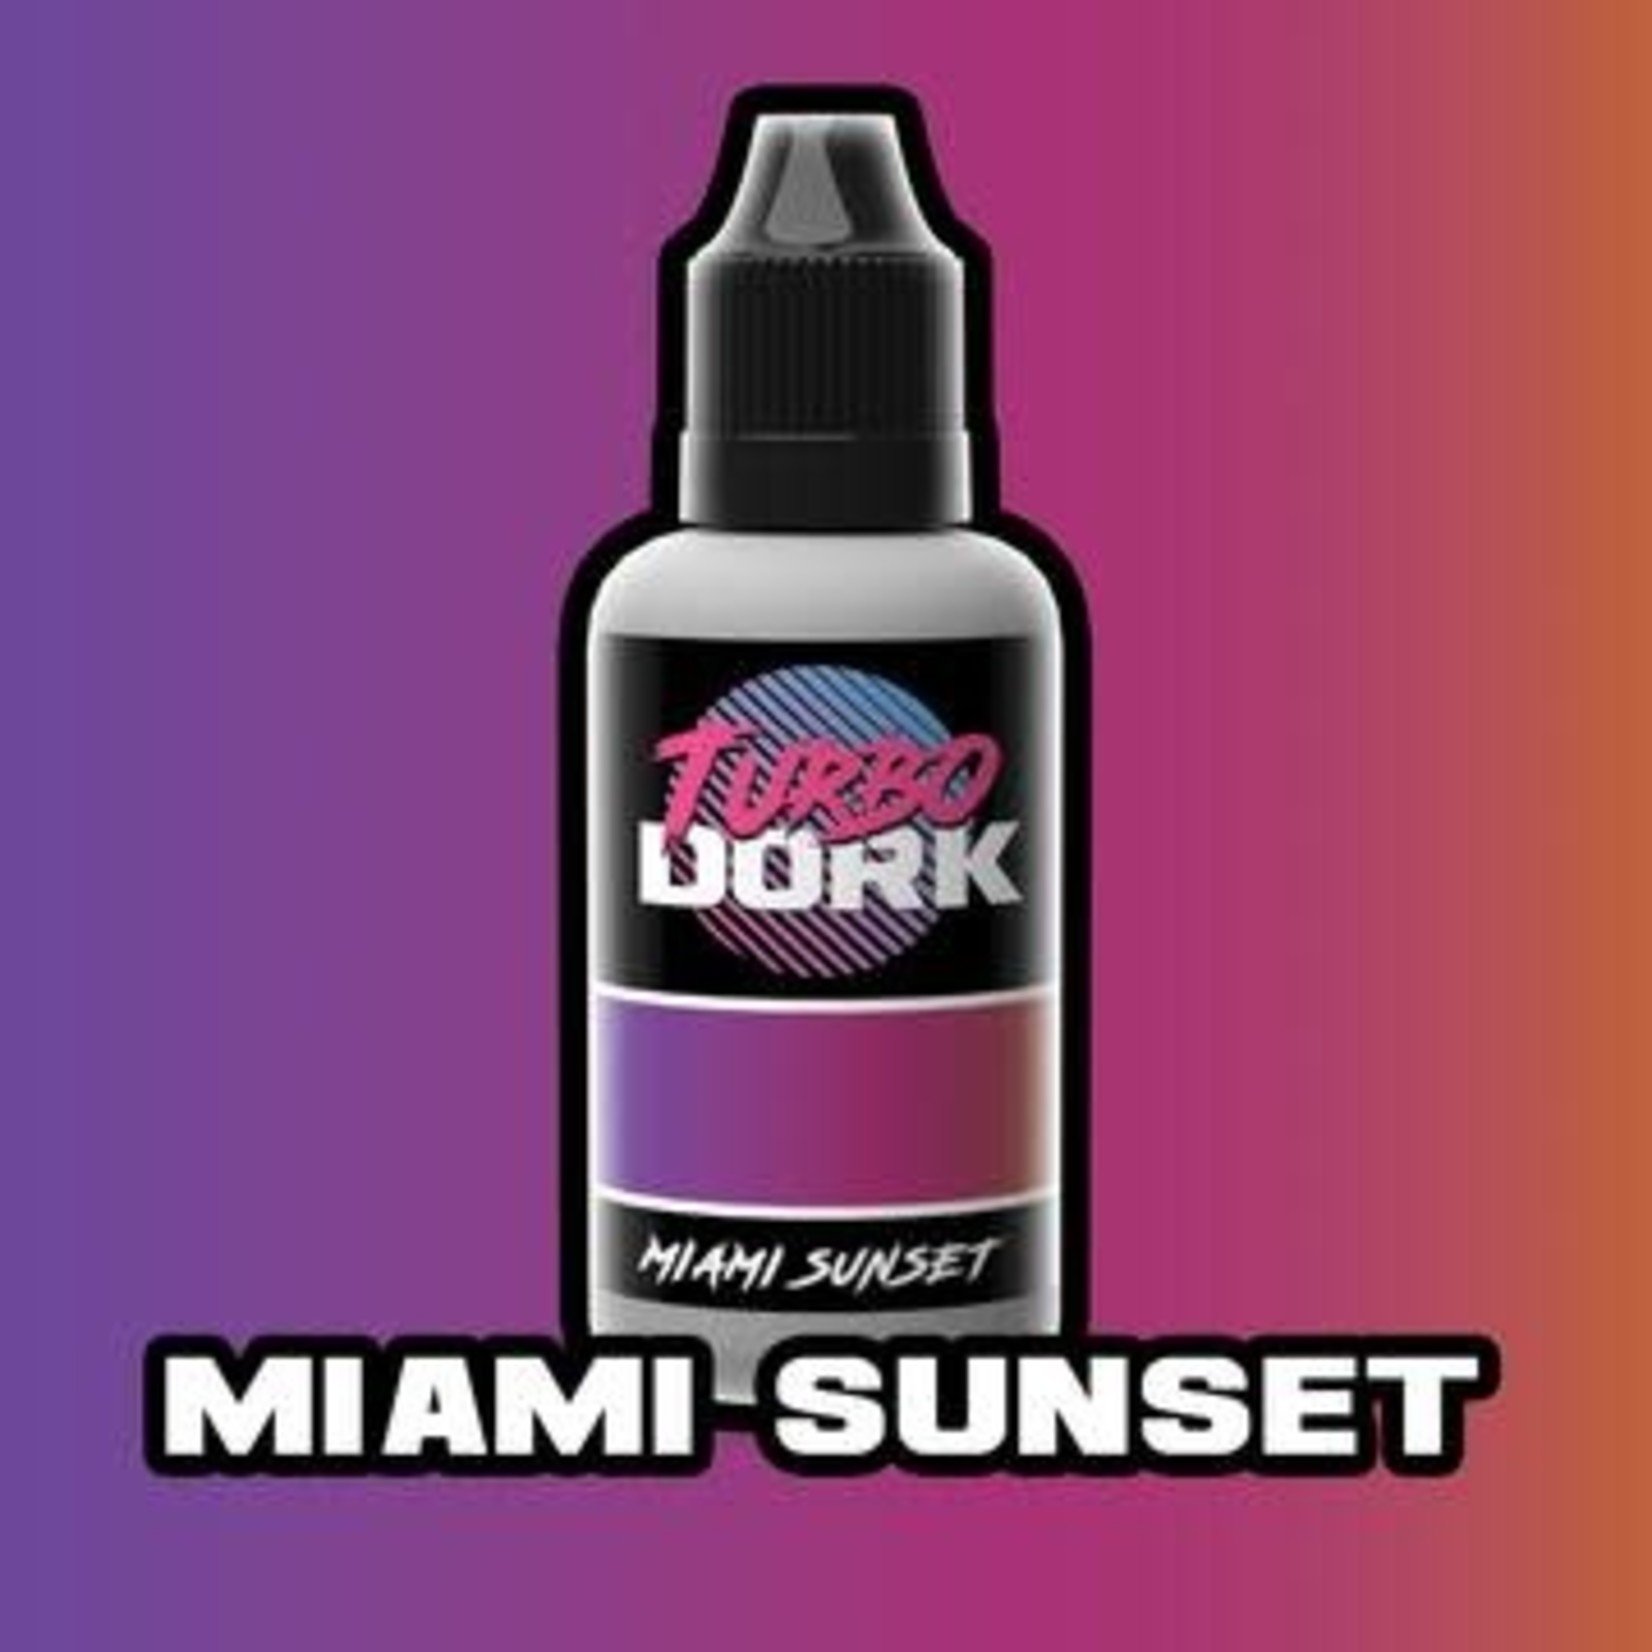 Turbo Dork Turbo Dork Miami Sunset Turboshift Acrylic Paint 20ml